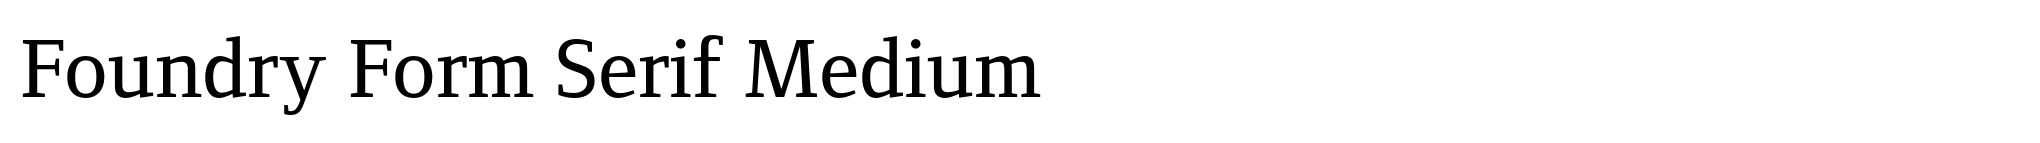 Foundry Form Serif Medium image